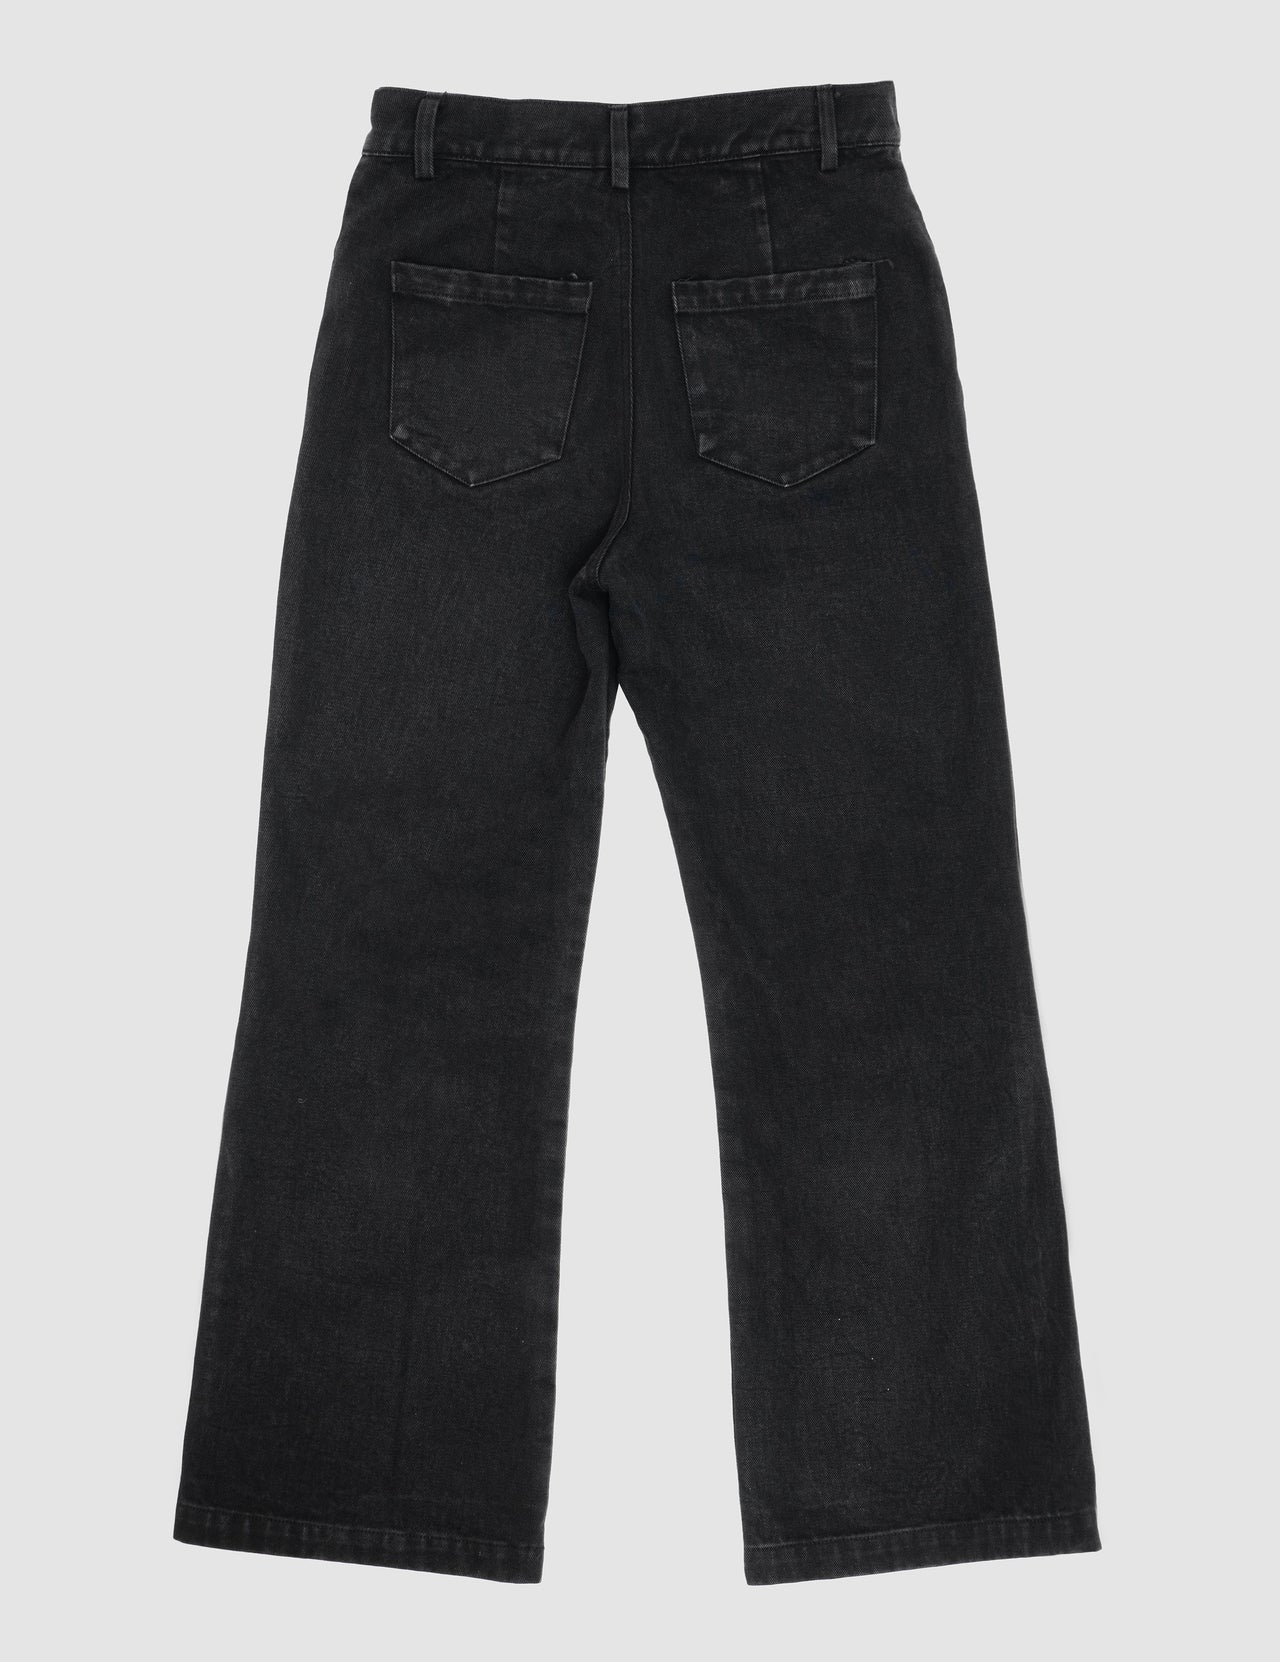 Studded Jeans (Black)